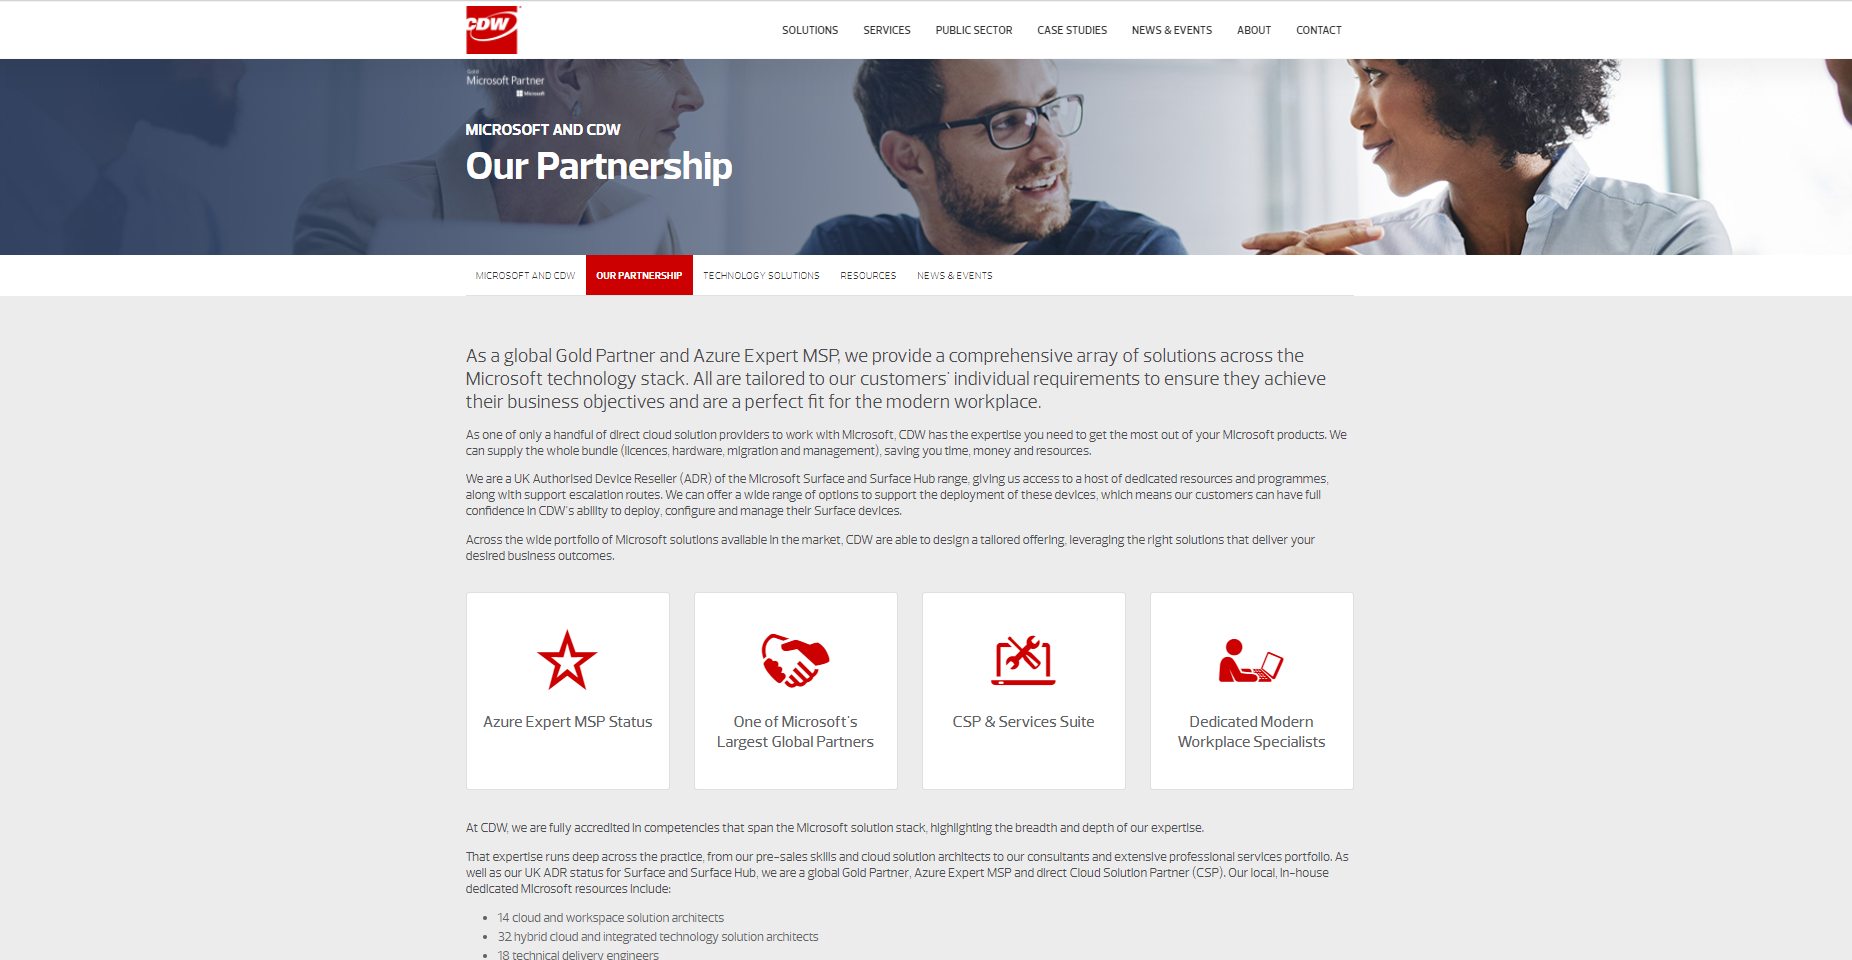 CDW Microsoft partnership web copy